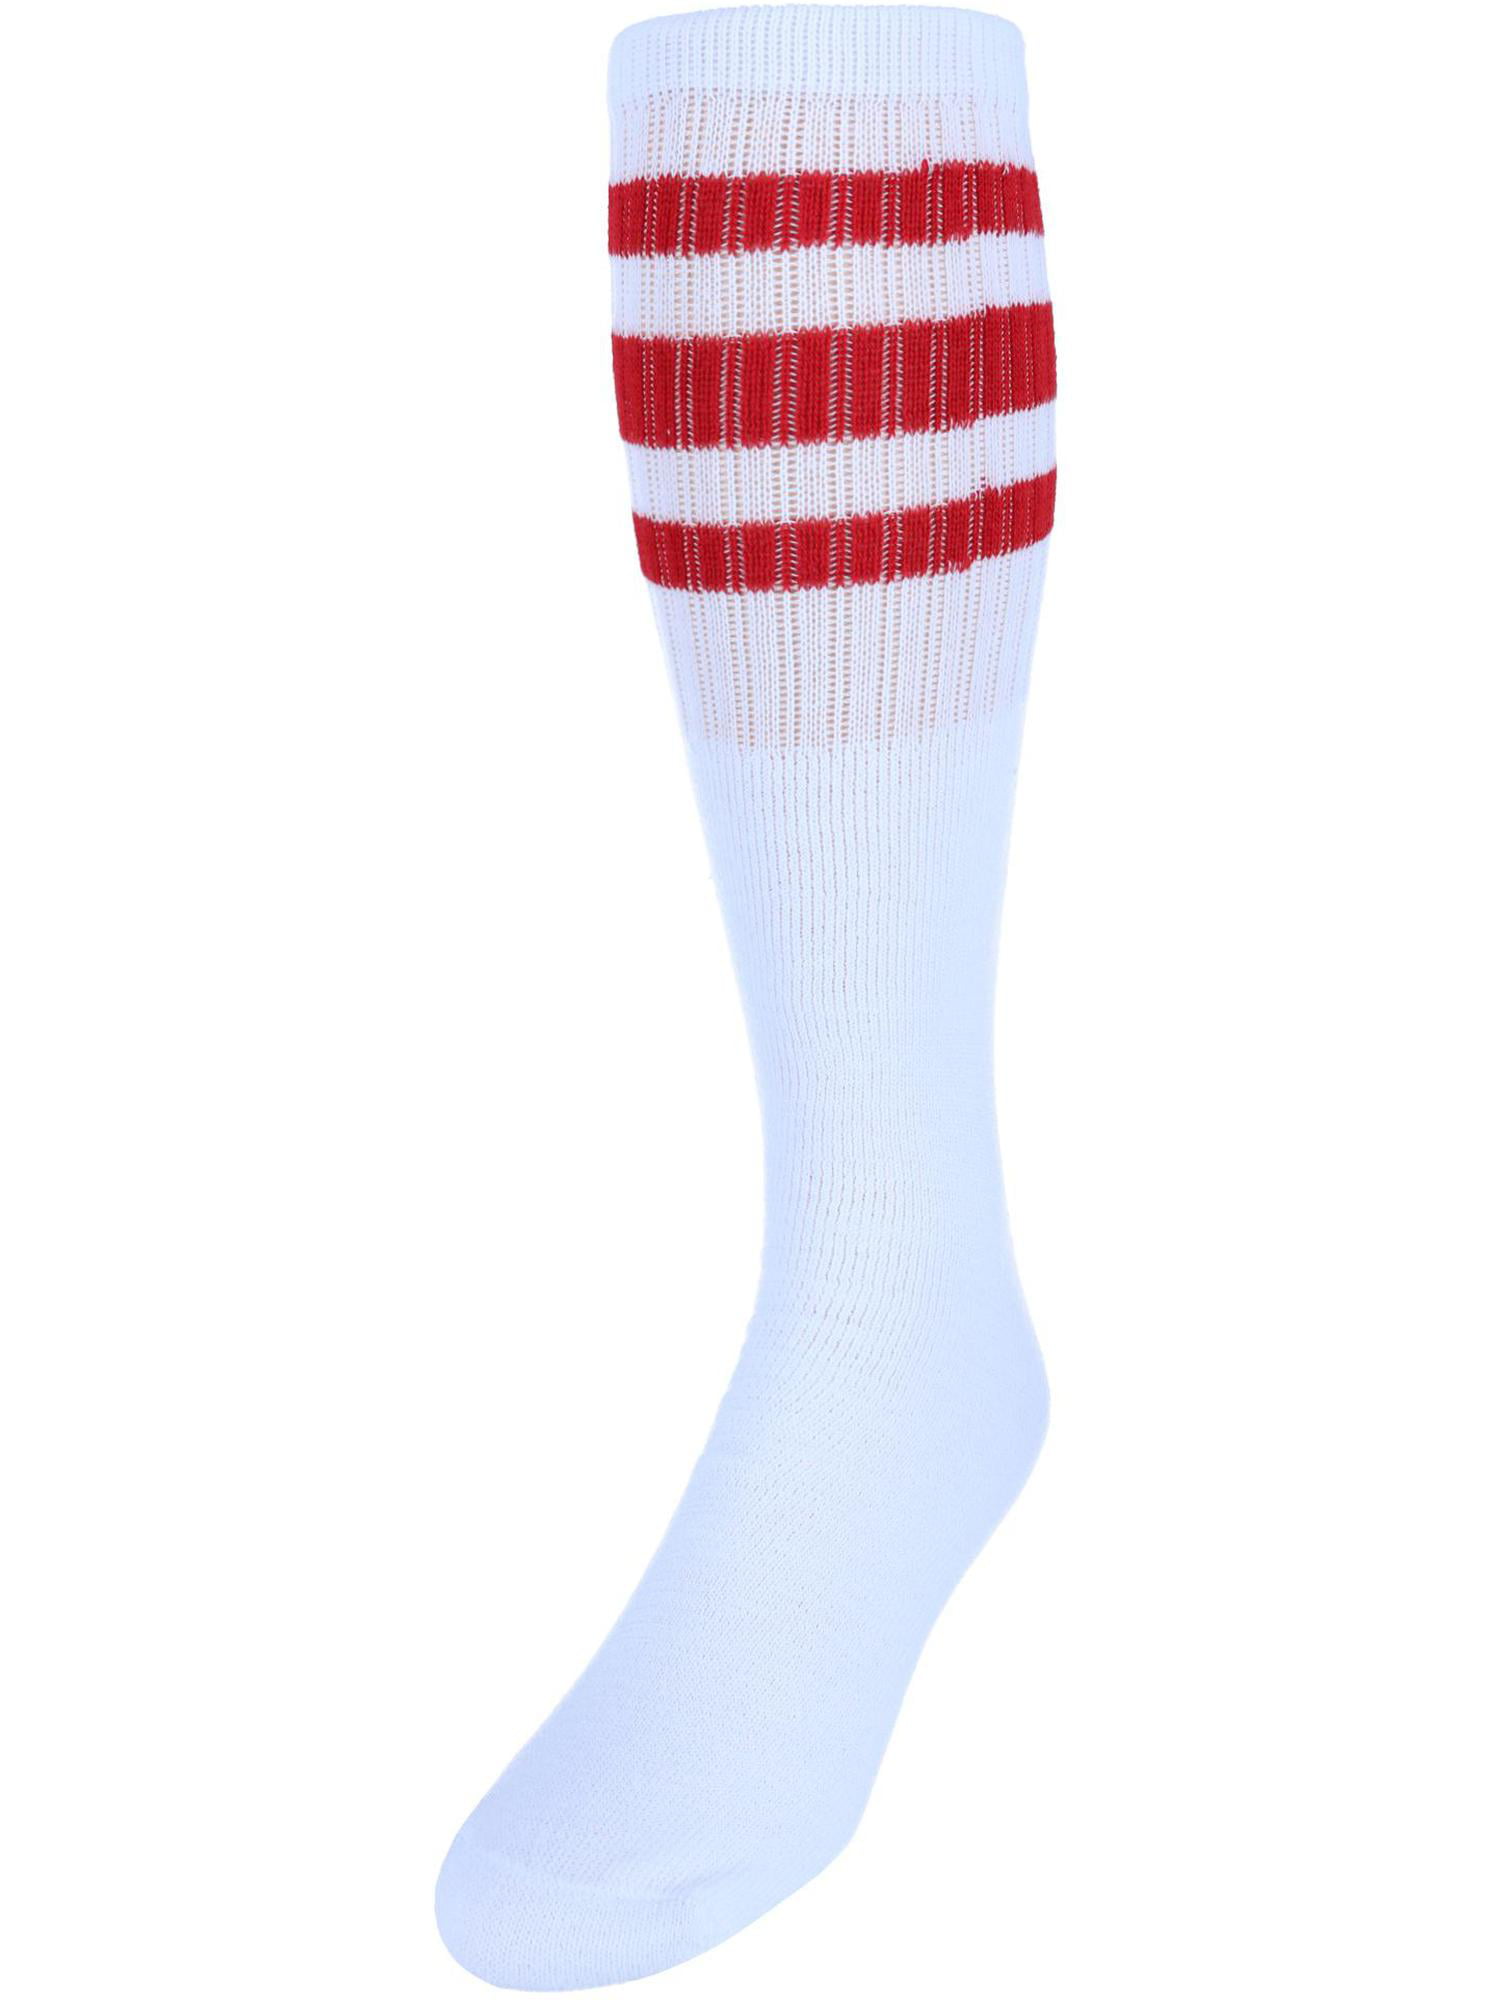 CTM Men's Big and Tall Striped Tube Socks (4 Pairs), Black, Red, Royal  Blue, Green